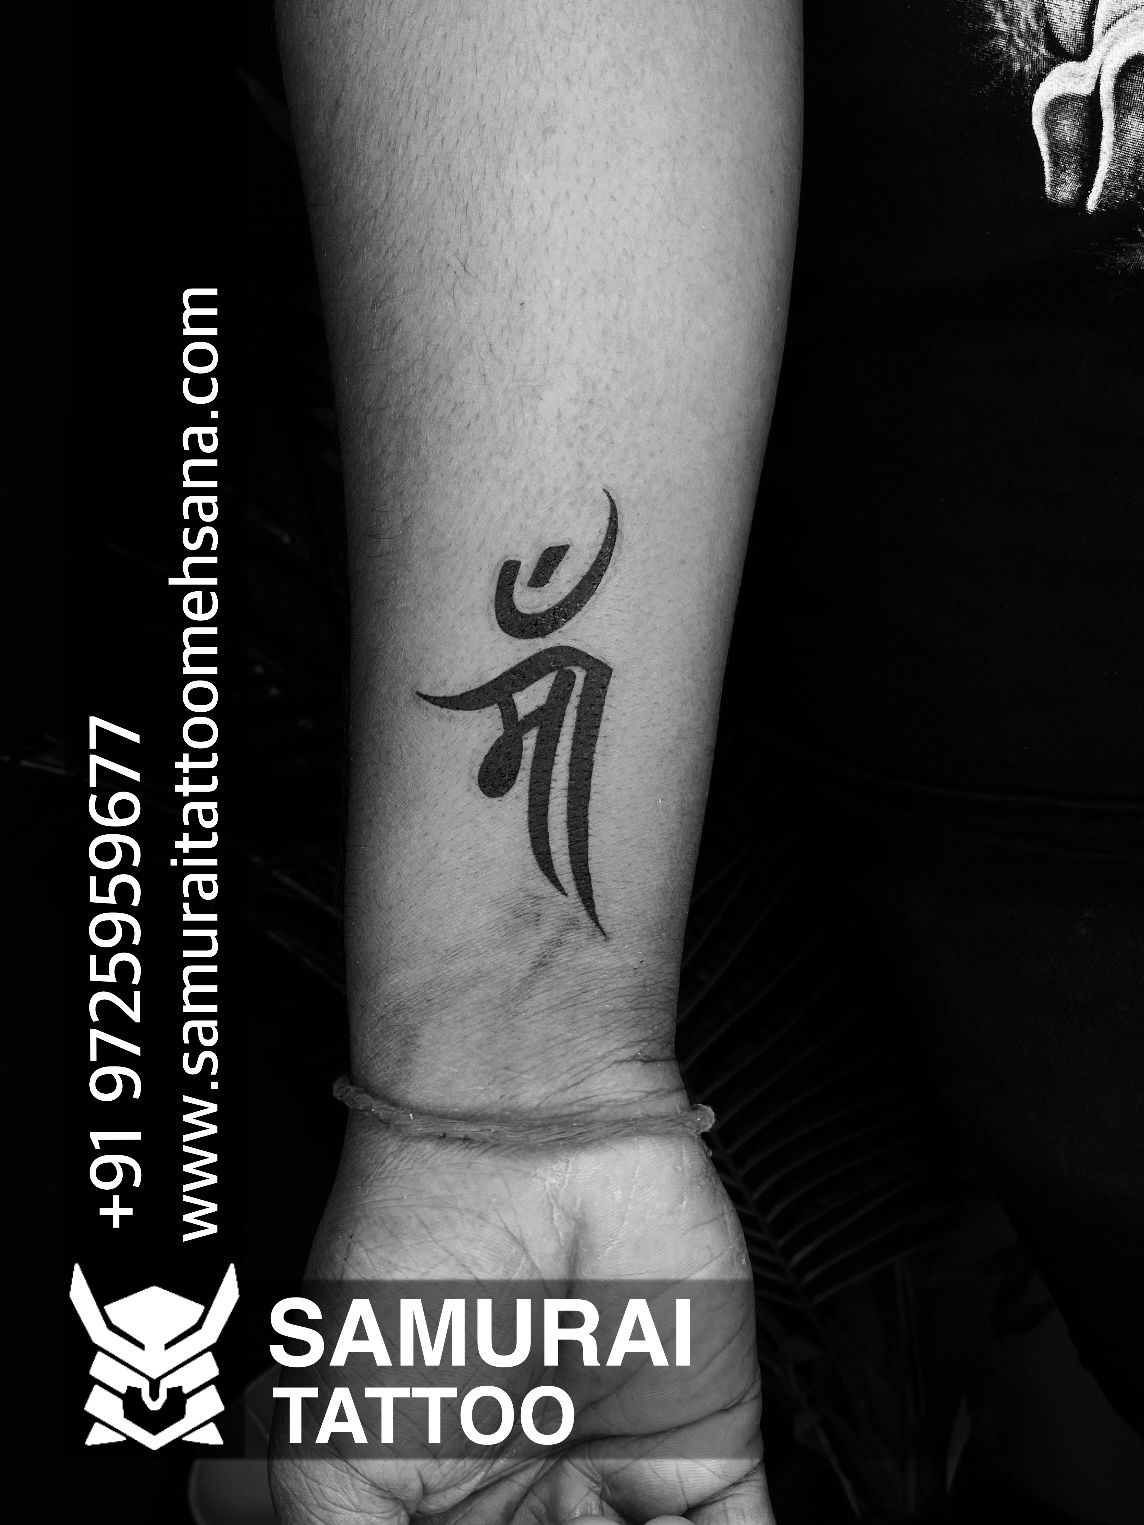 Deep Aarchi Tattoo - Hindi tattoo design done at Permanent Tattoo Art  #permanenttattooart #deepaarchitattoo #tattoo #poetry #tattooedguys  #tattooartistingurgaon #tattooartist #awesometattoos #quotetattoo #quote # tattoo #quoteandsayings #inked ...